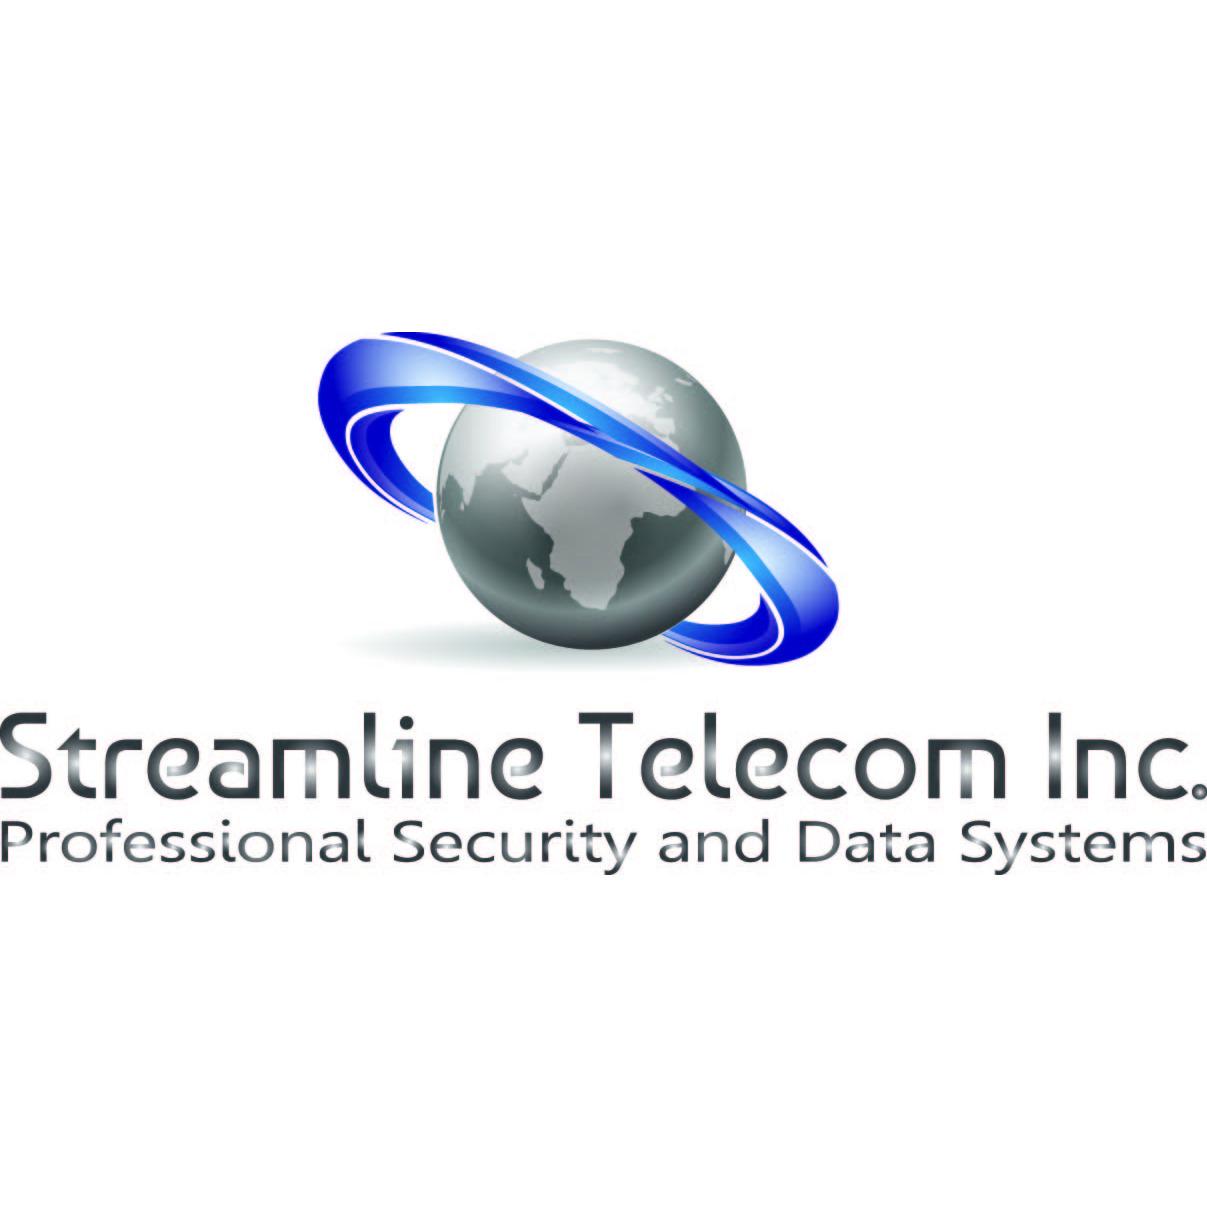 Photo of Streamline Telecom in Whitestone City, New York, United States - 2 Picture of Point of interest, Establishment